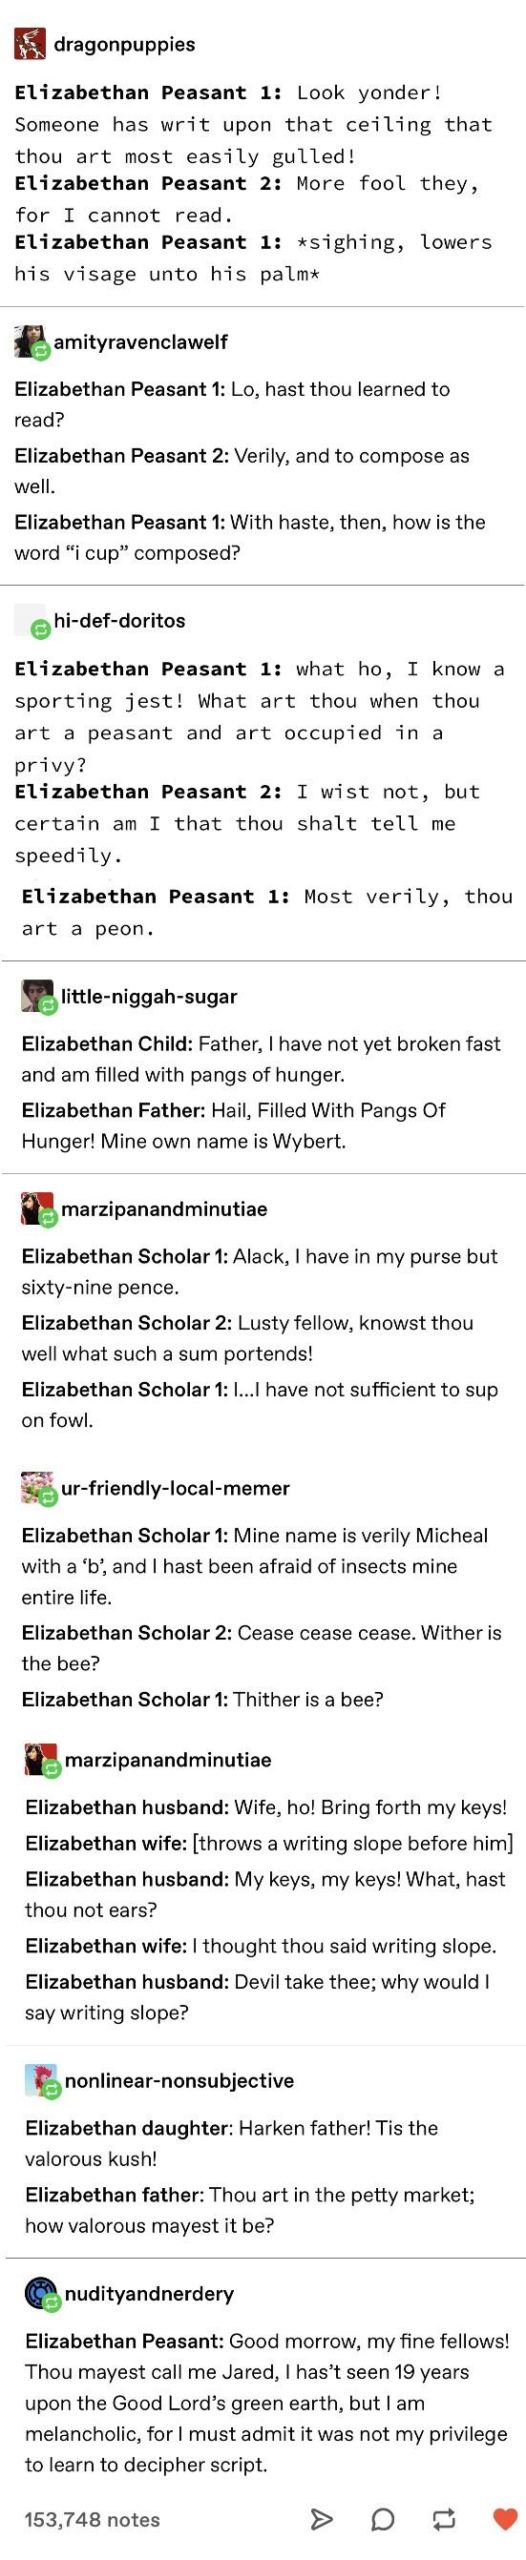 Elizabethian+Jokes